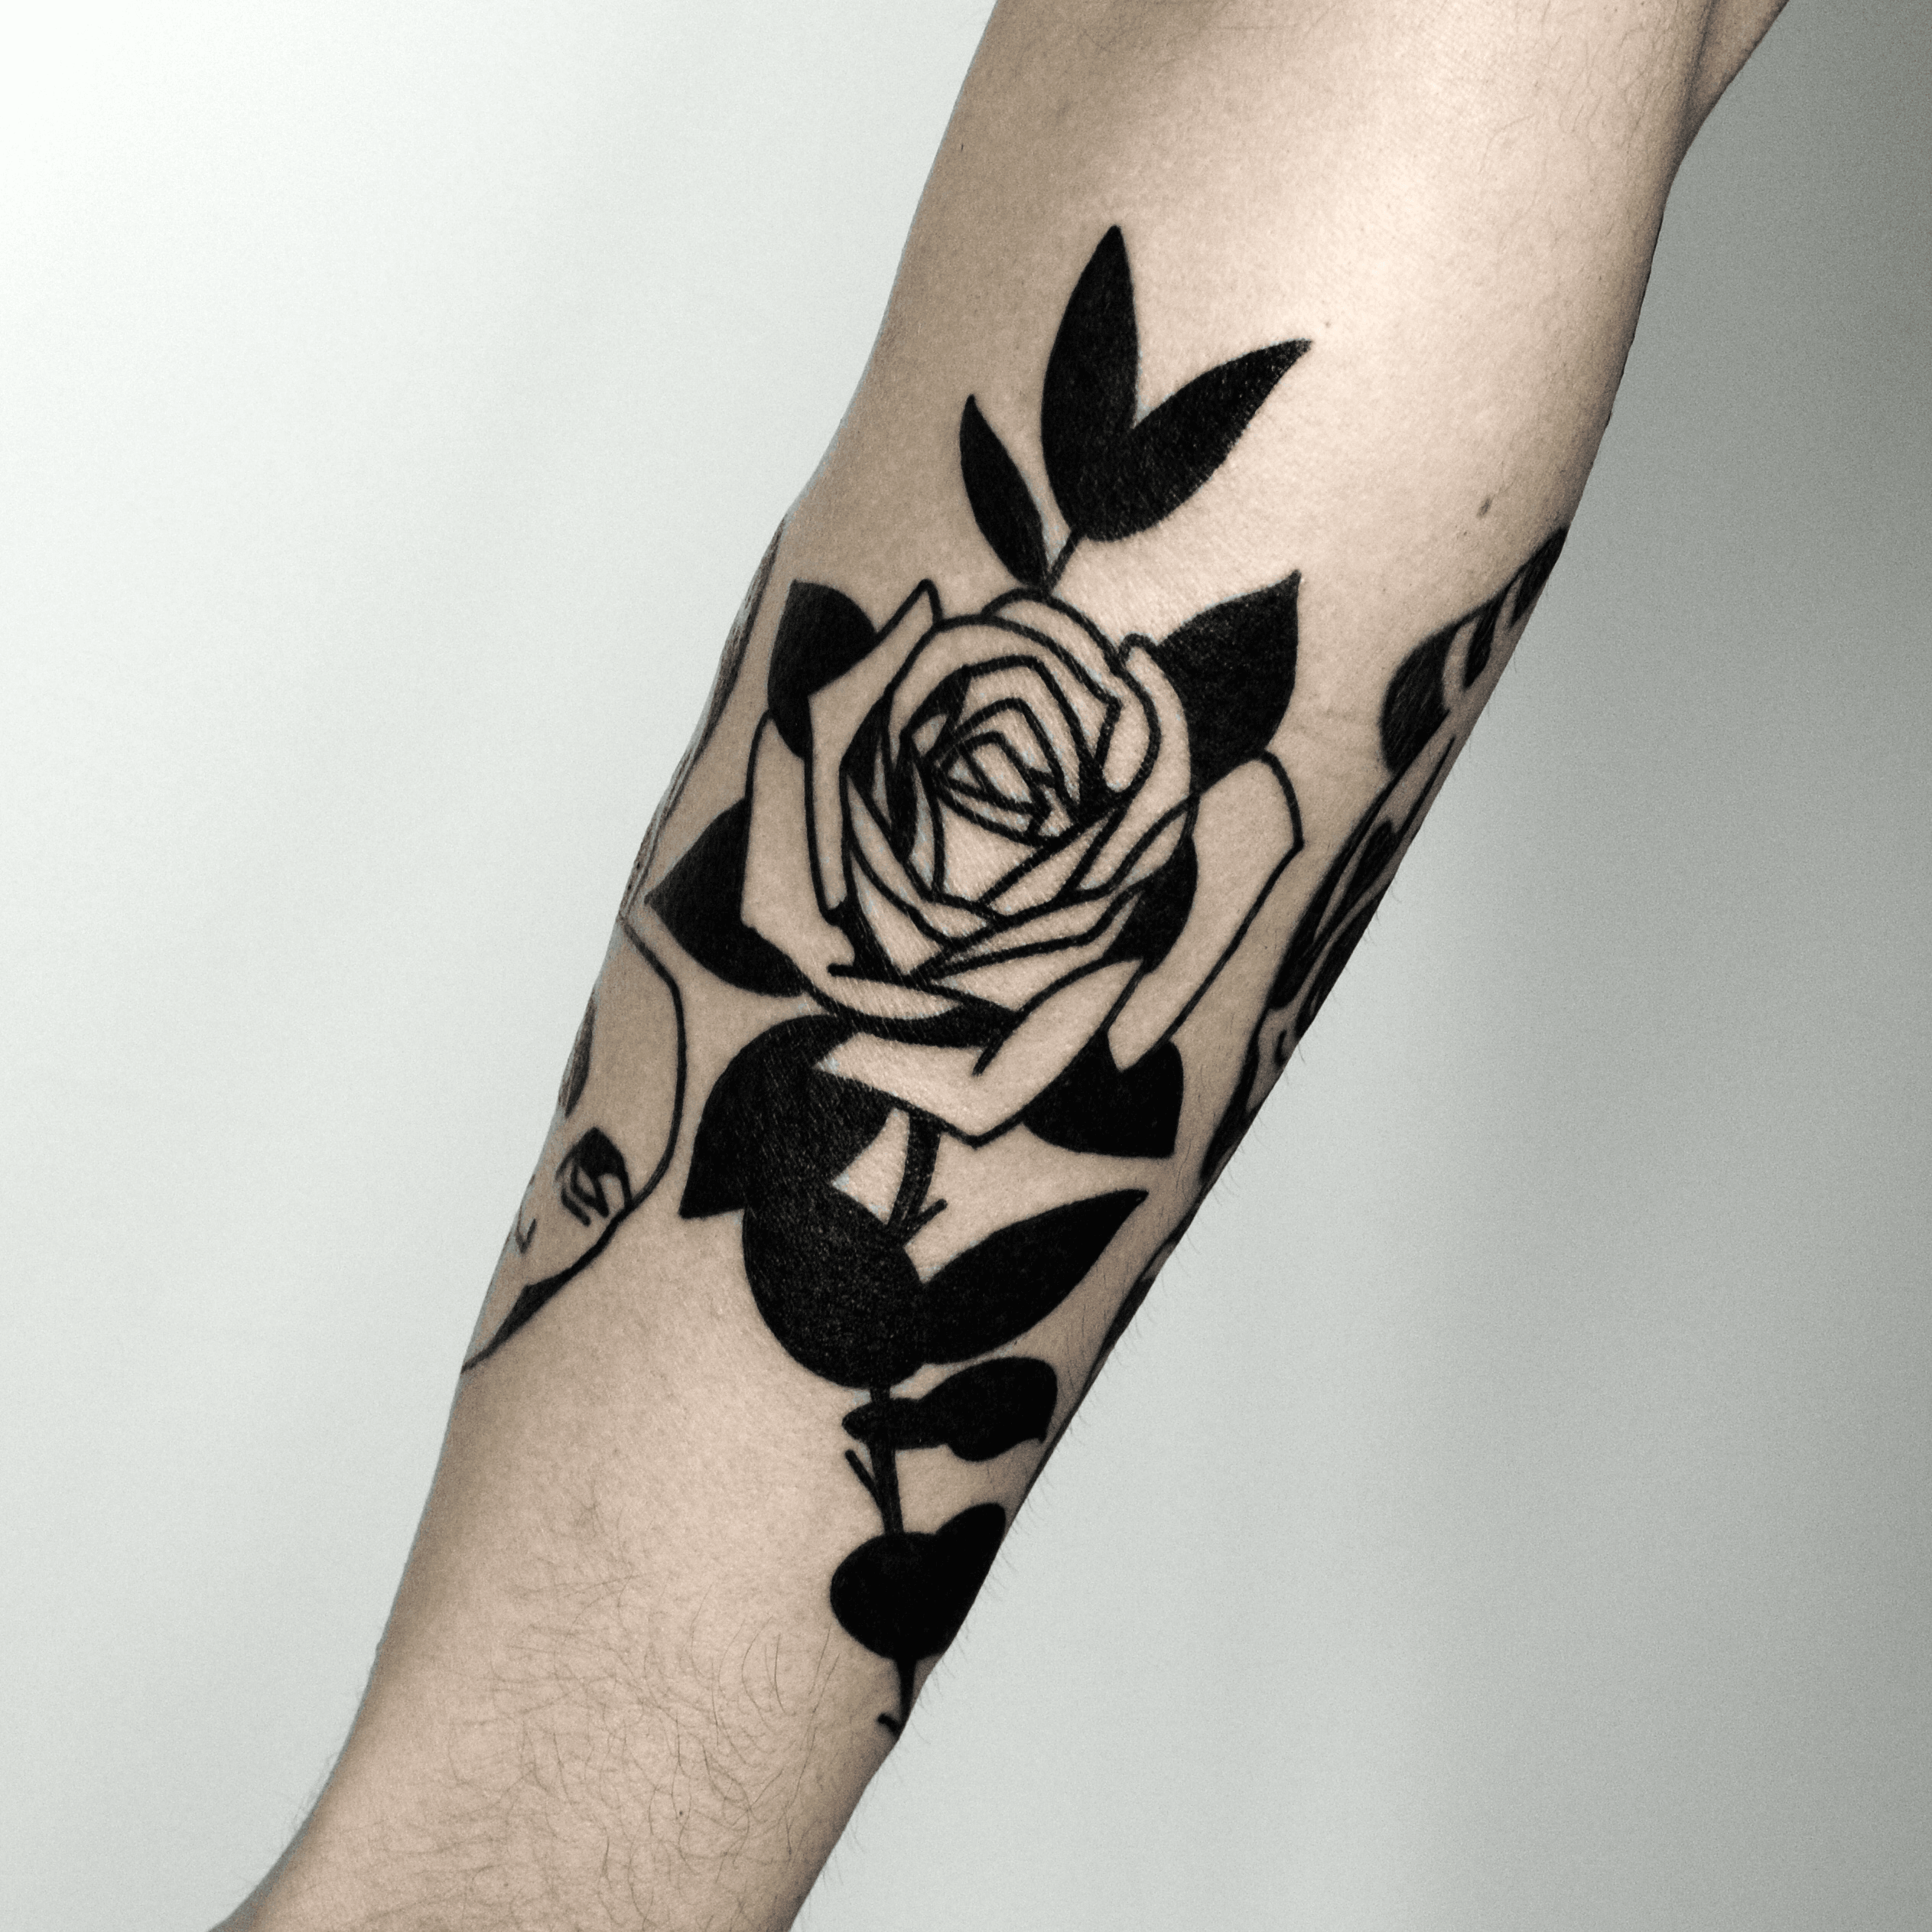 Black Rose Tattoo Dark Beauty Death Or Something Else